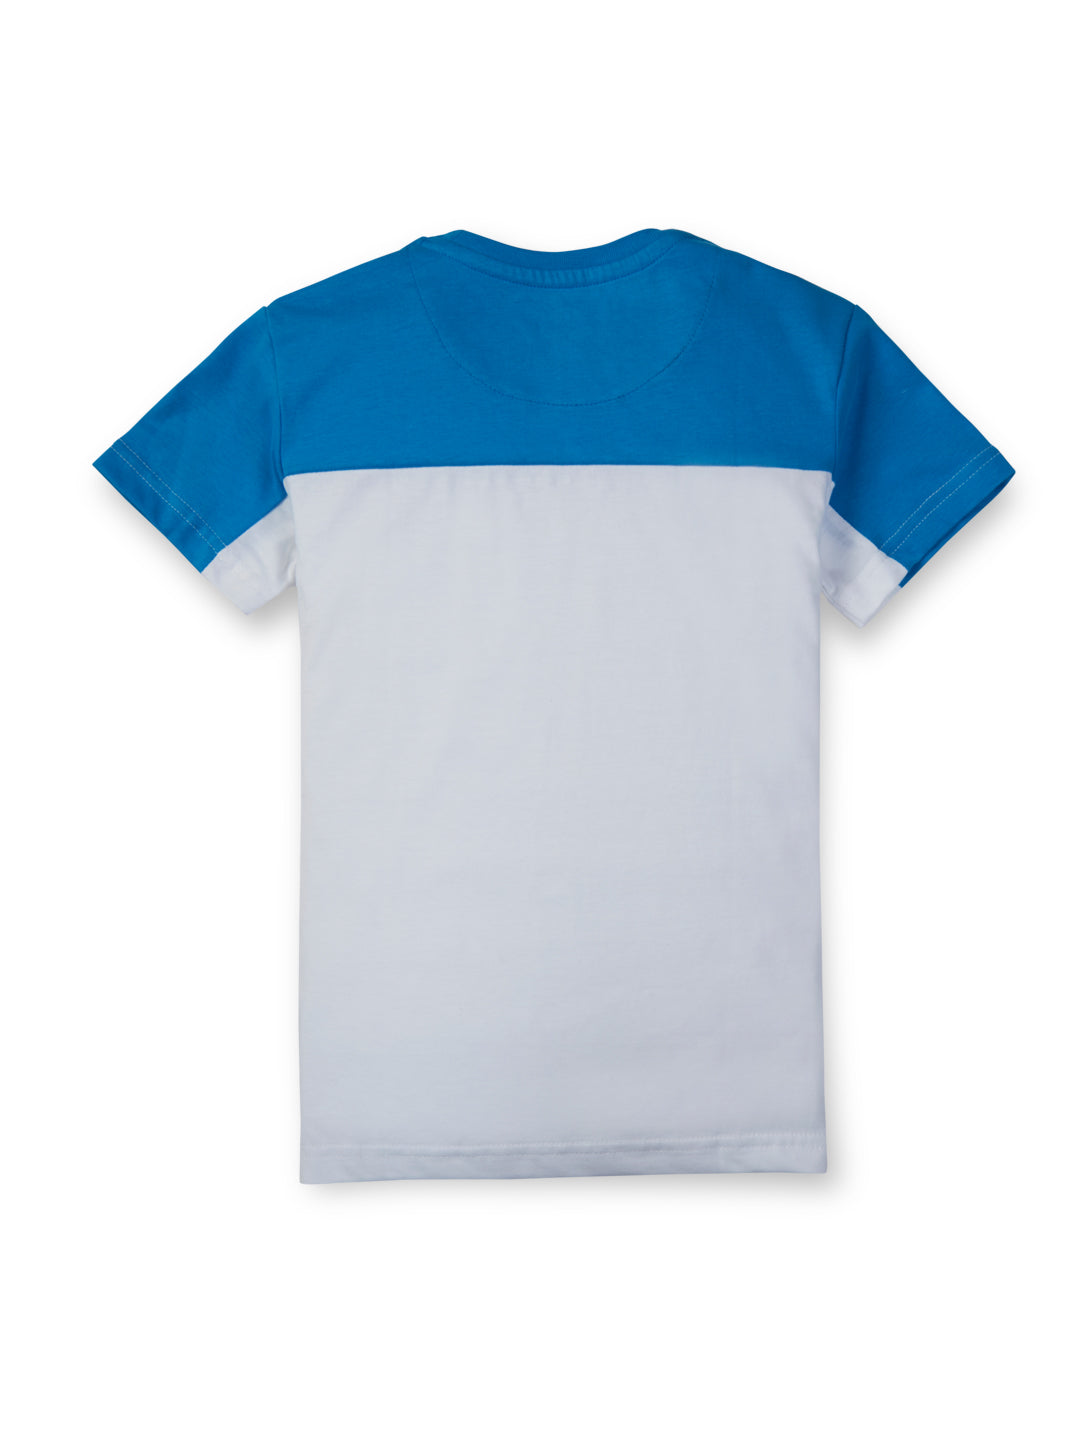 Boys white blue colour block printed t-shirt